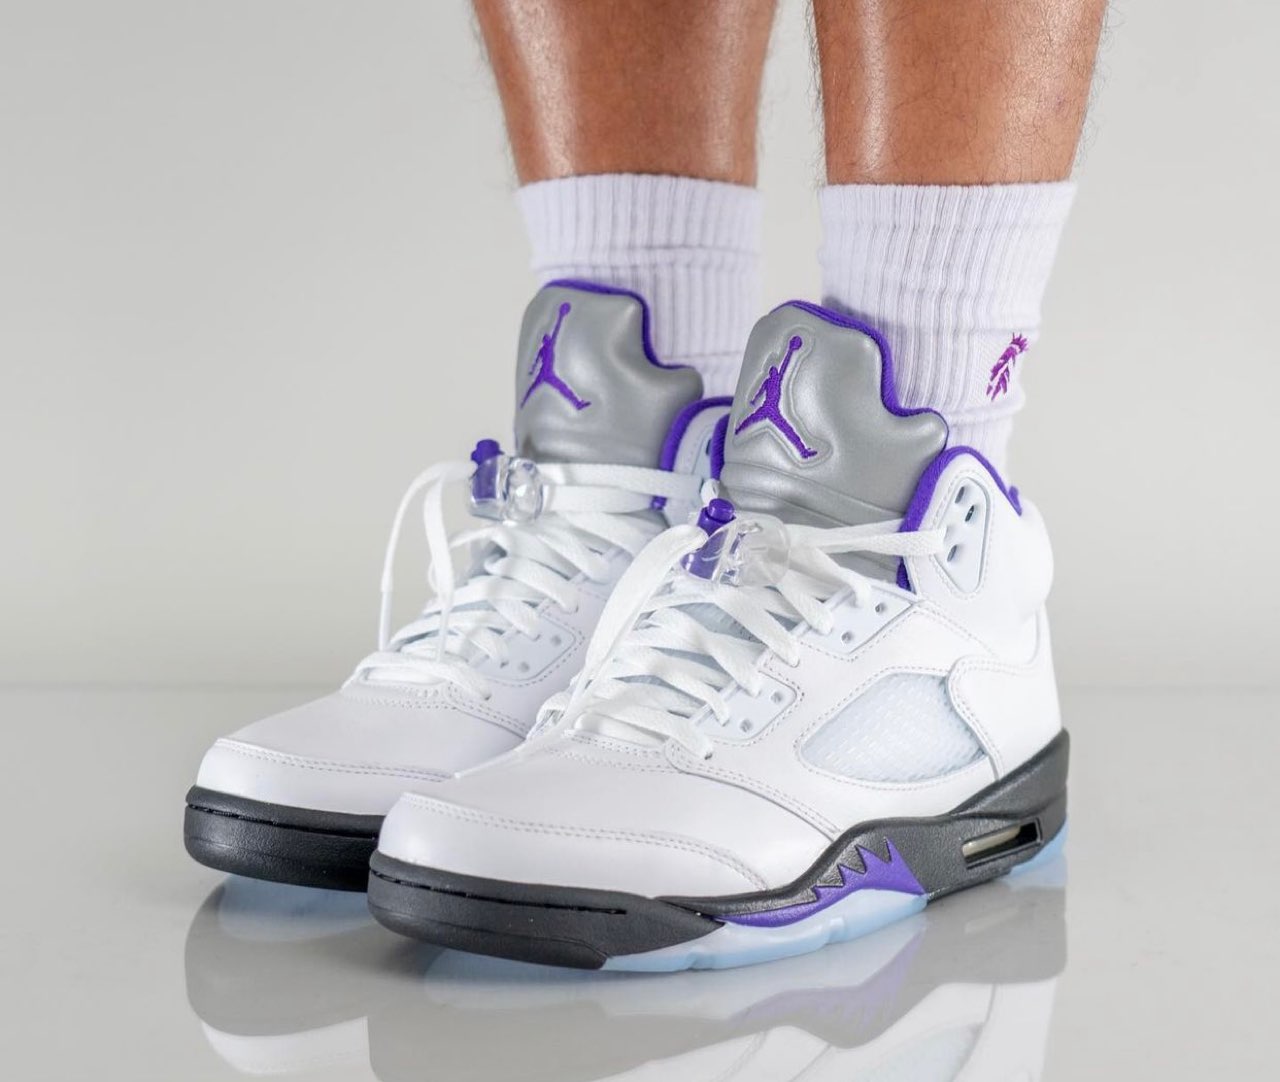 Nike】Air Jordan 5 Retro “Dark Concord”が国内8月16日に発売予定 ...